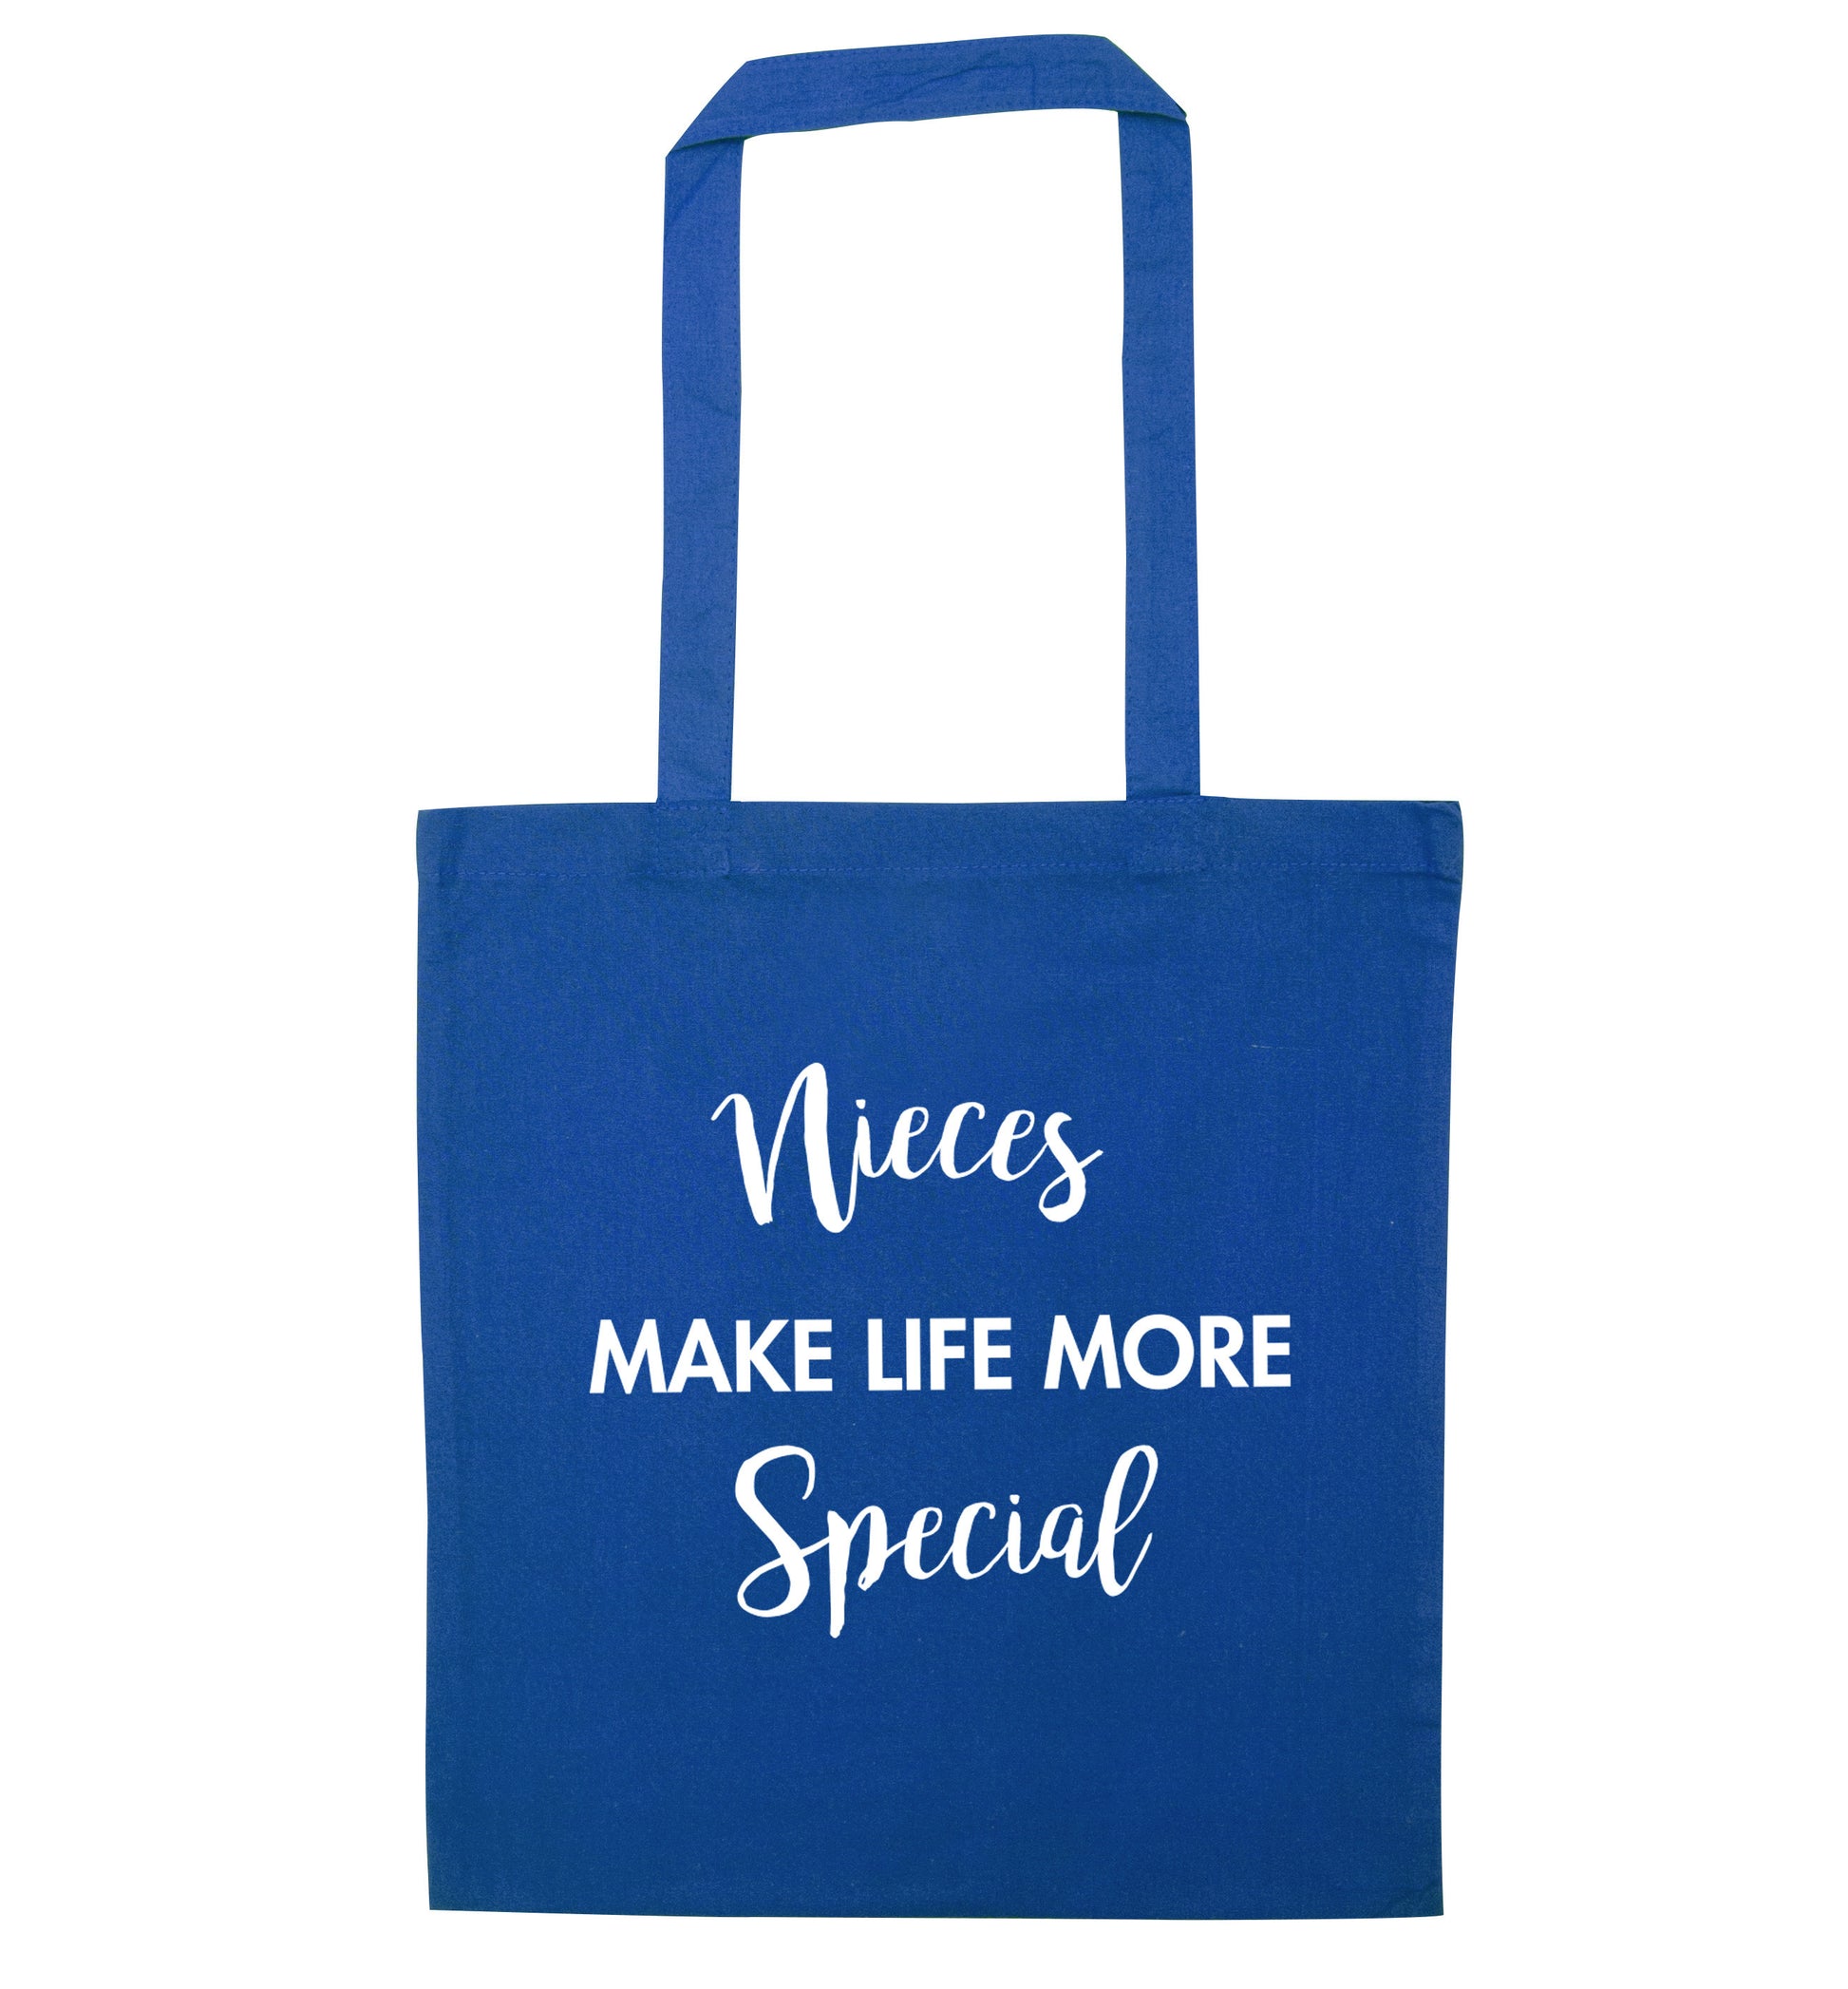 Nieces make life more special blue tote bag